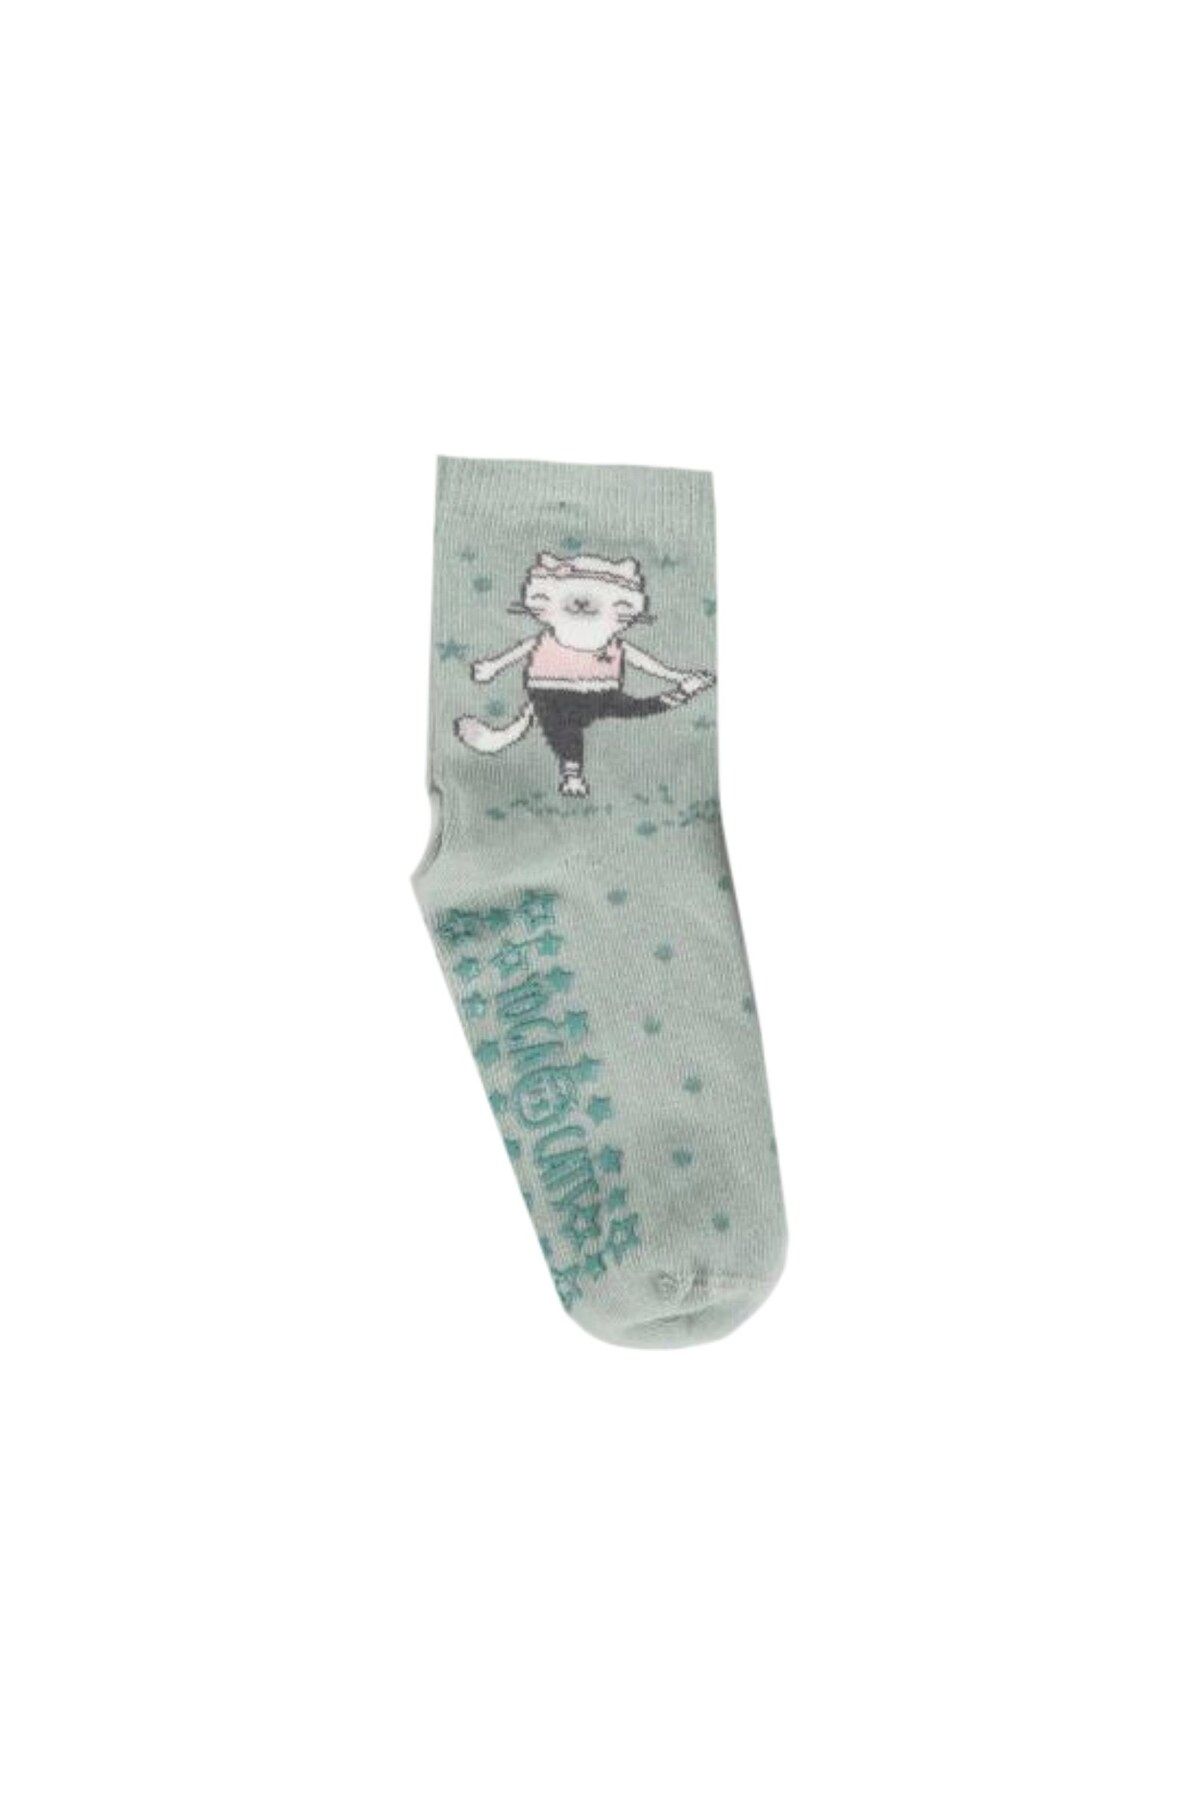 Katamino Wroom Abs'li Kız Bebek Çorabı K20261